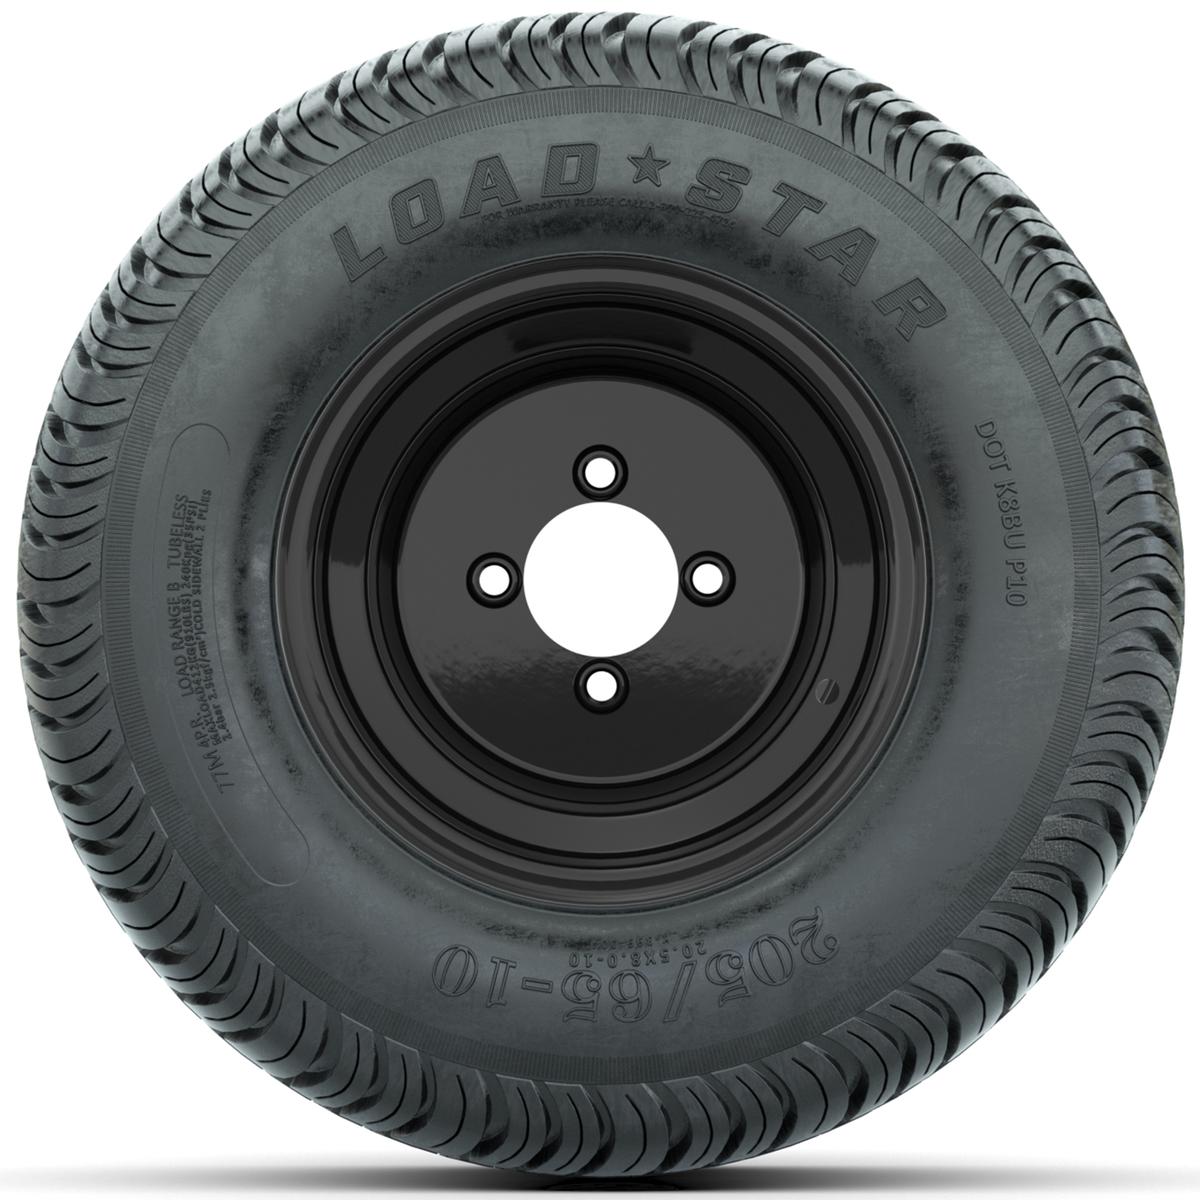 Set of (4) 10 in Black Steel Offset Wheels with 205/65-10 Kenda Load Star Tires